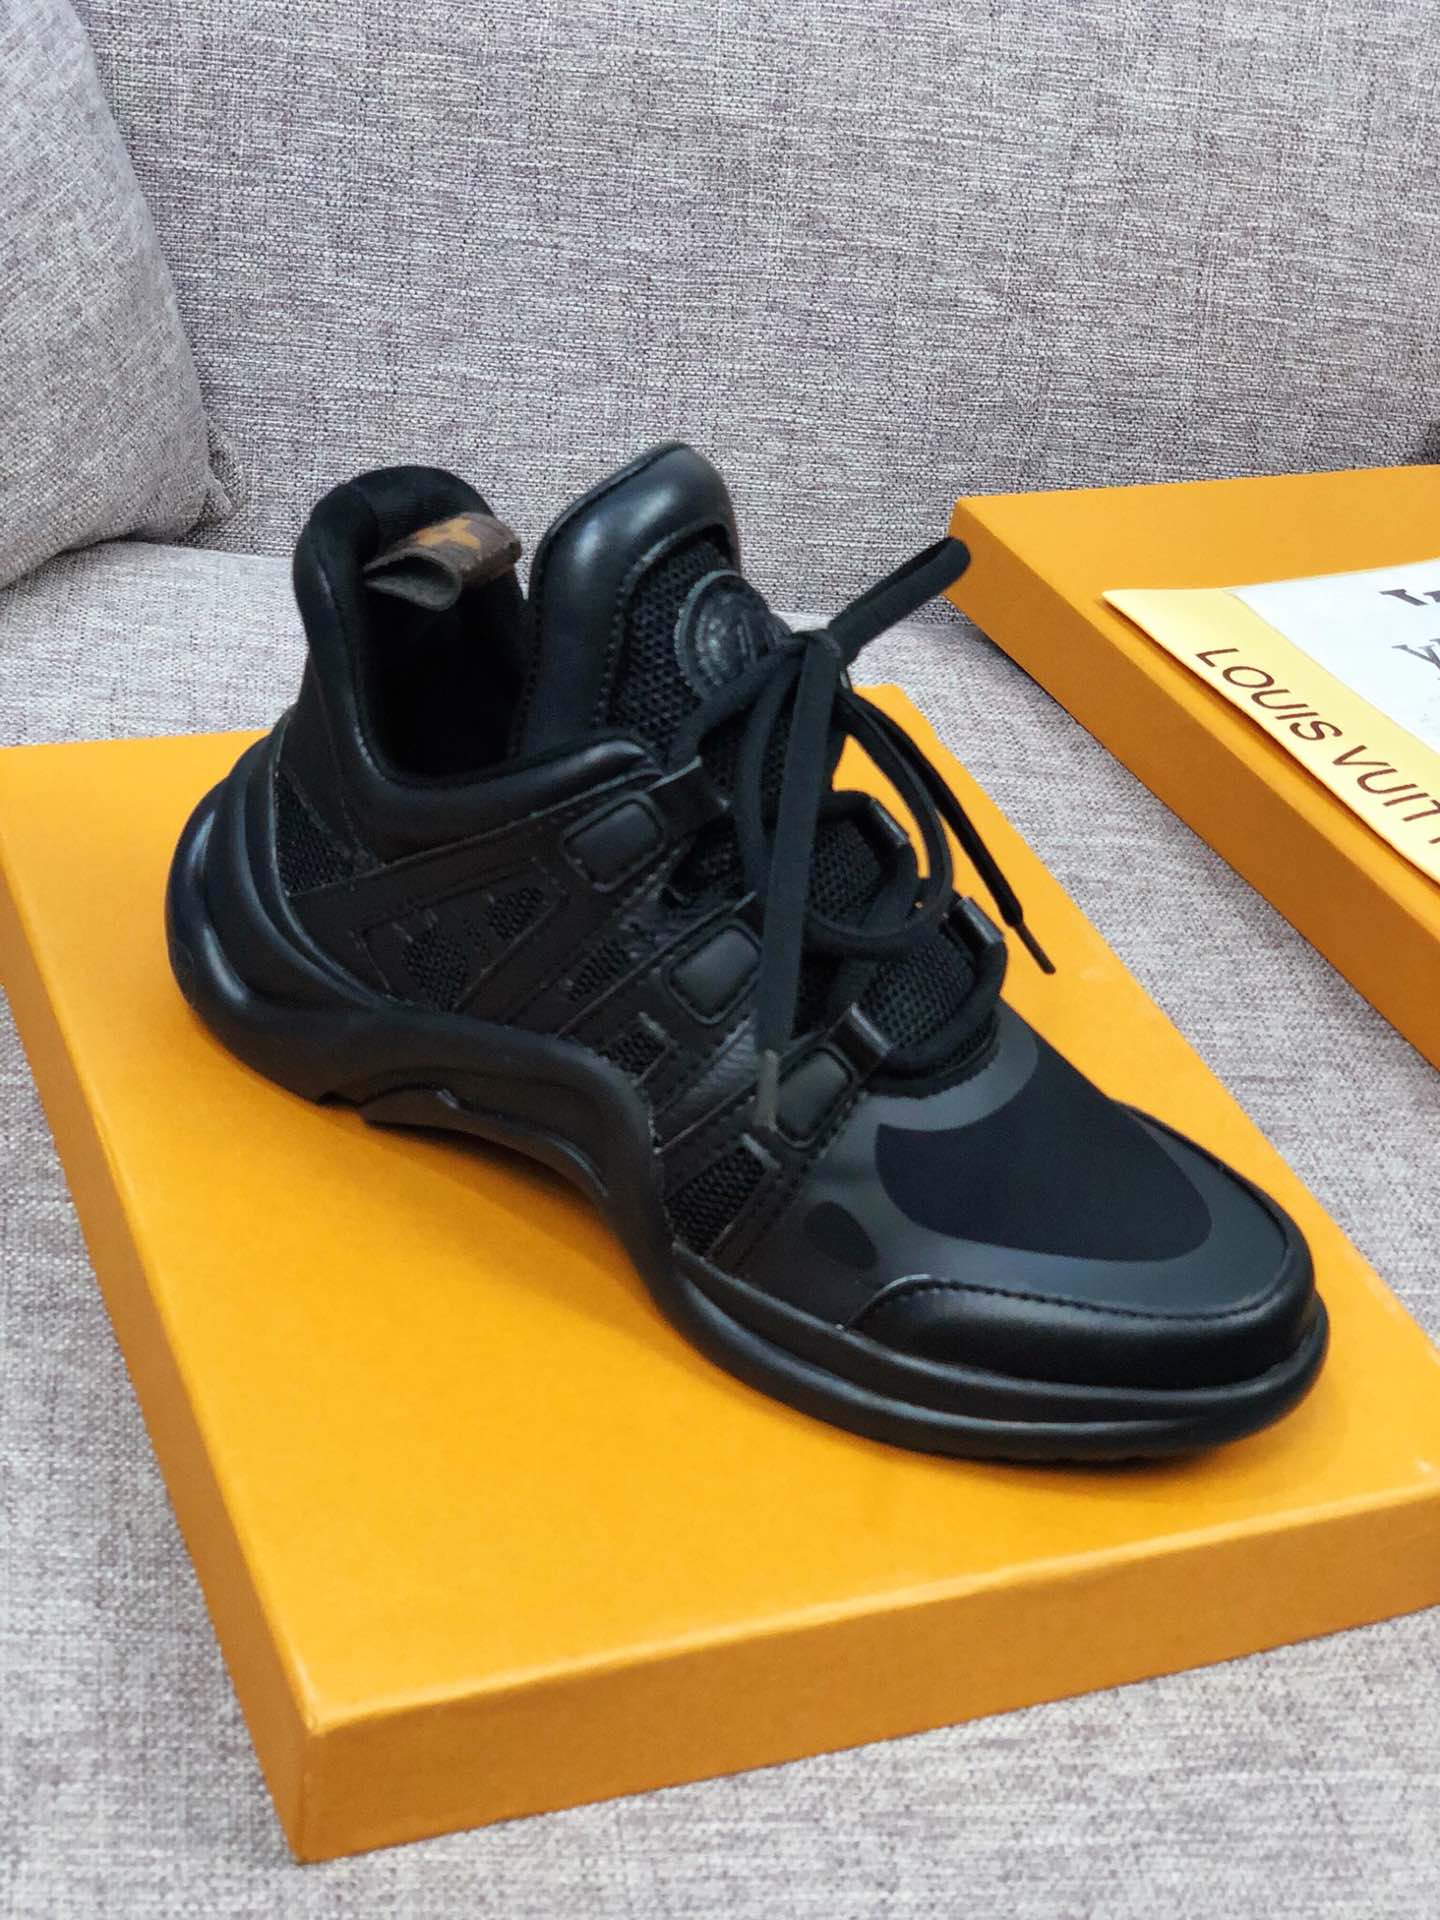 BL - LUV Archlight Full Black Sneaker